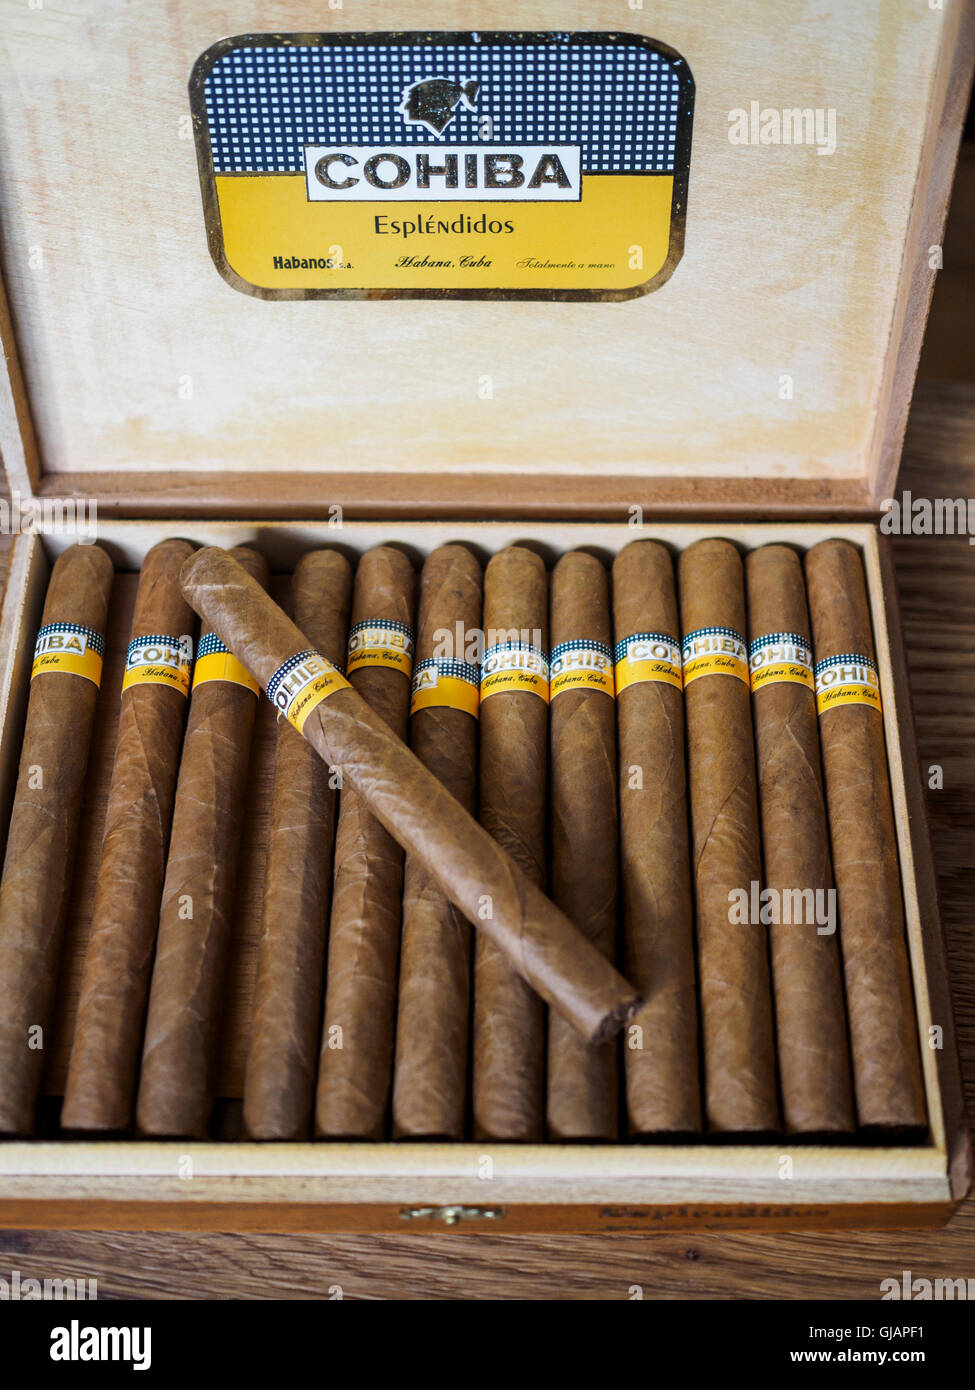 Sigaro cubano scatola contenente Cohiba Esplendios sigari, fatta a mano in Cuba Foto Stock